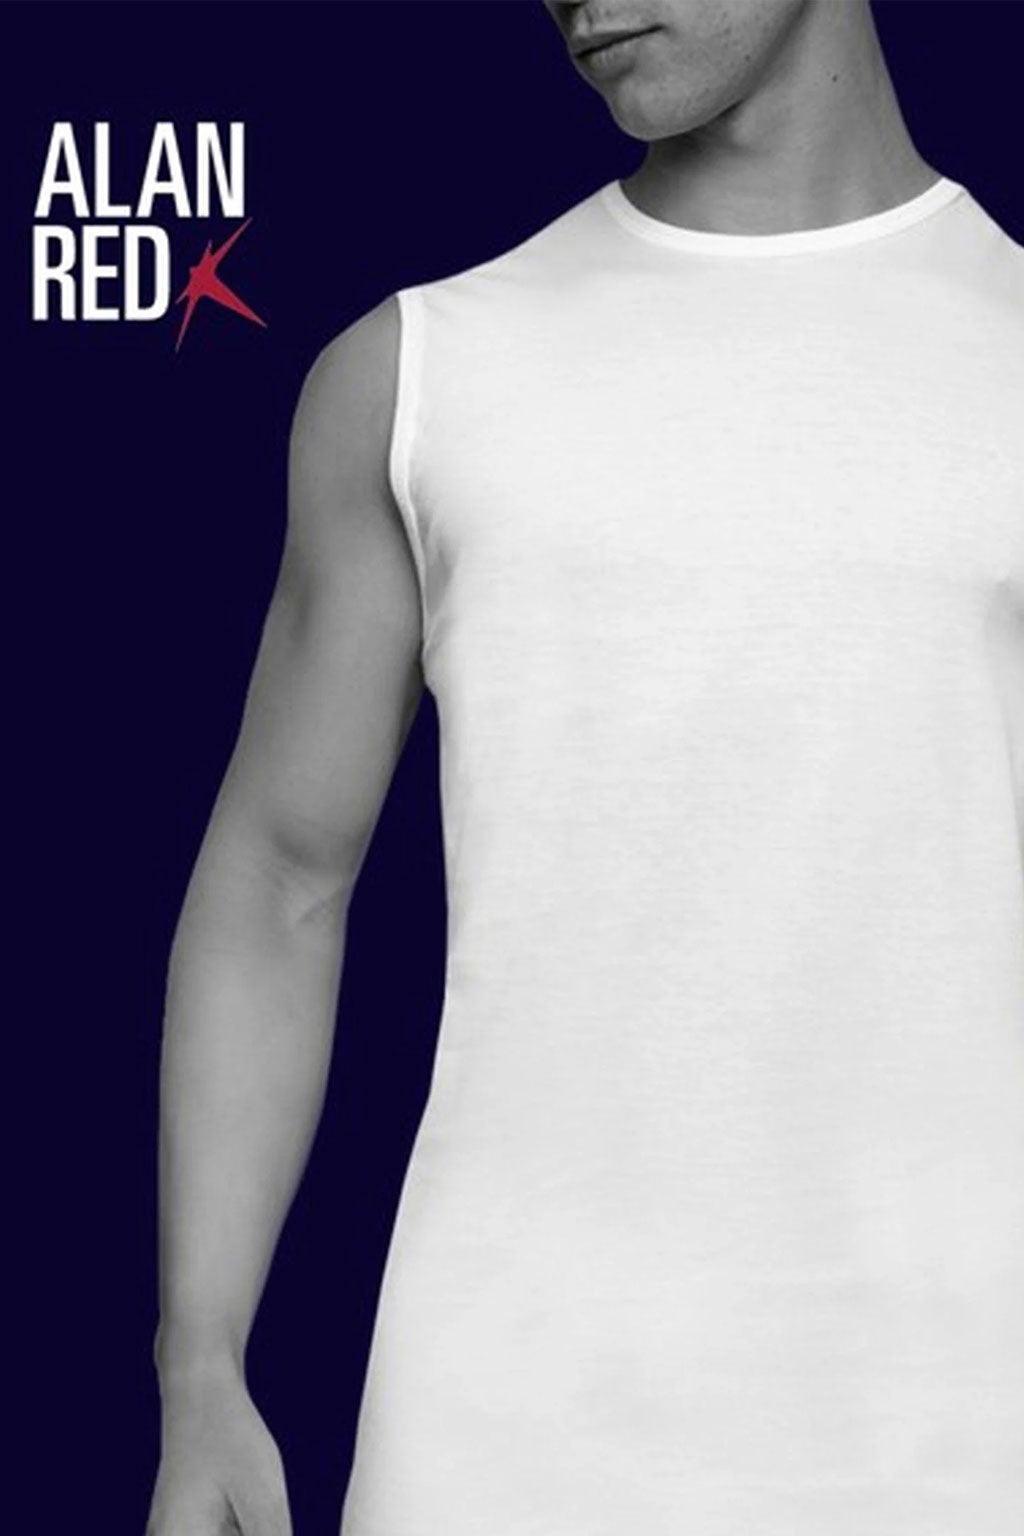 Alan Red singlet - Big Boss | the menswear concept